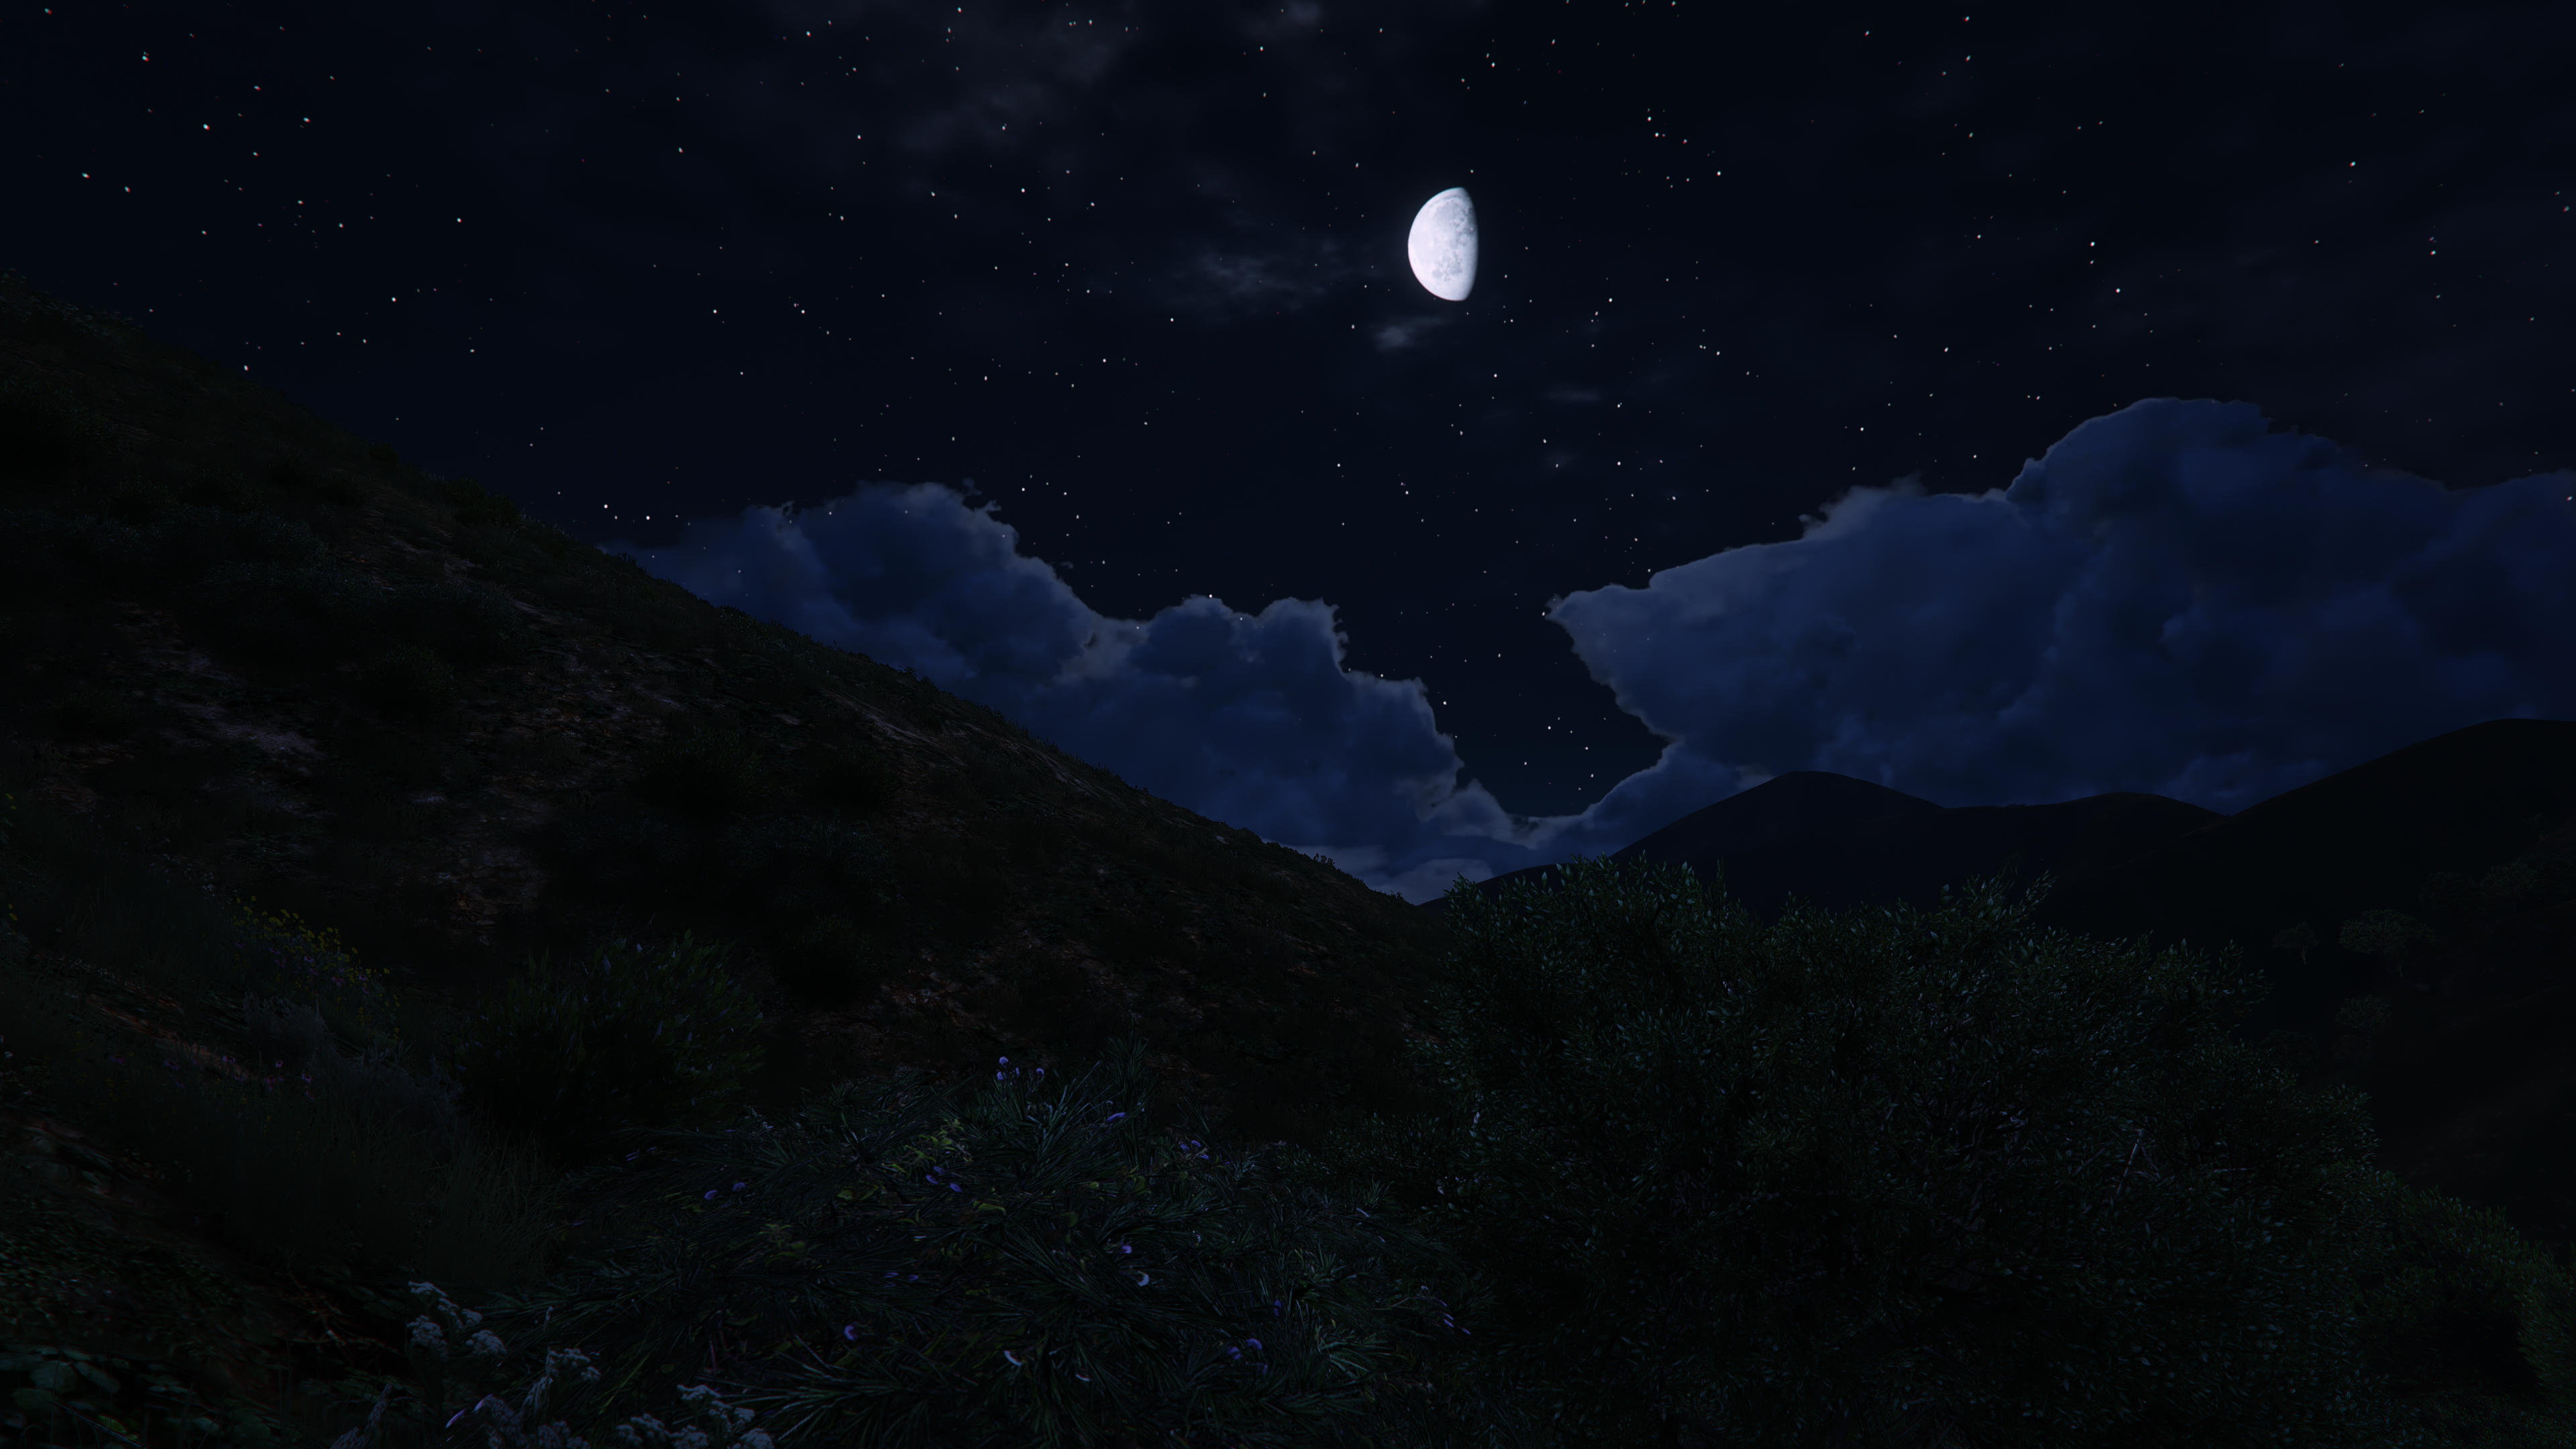 General 3840x2160 Grand Theft Auto V nature landscape moonlight depth of field low light sky stars night